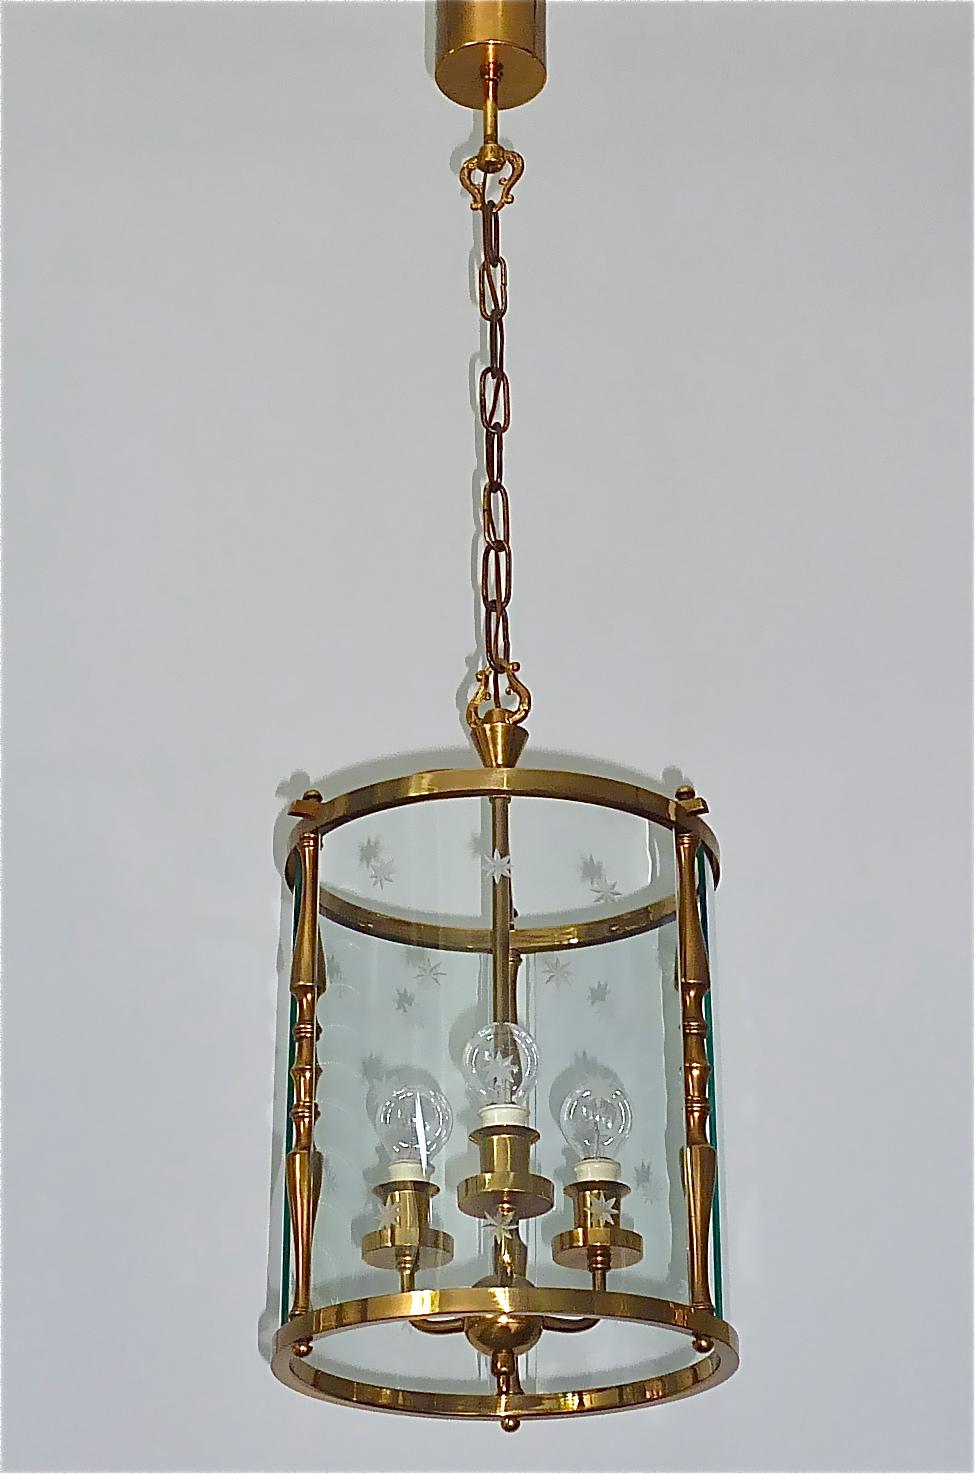 Faceted Rare Fontana Arte Pietro Chiesa Style Lantern Italian Lamp Brass Bent Glass 1950 For Sale